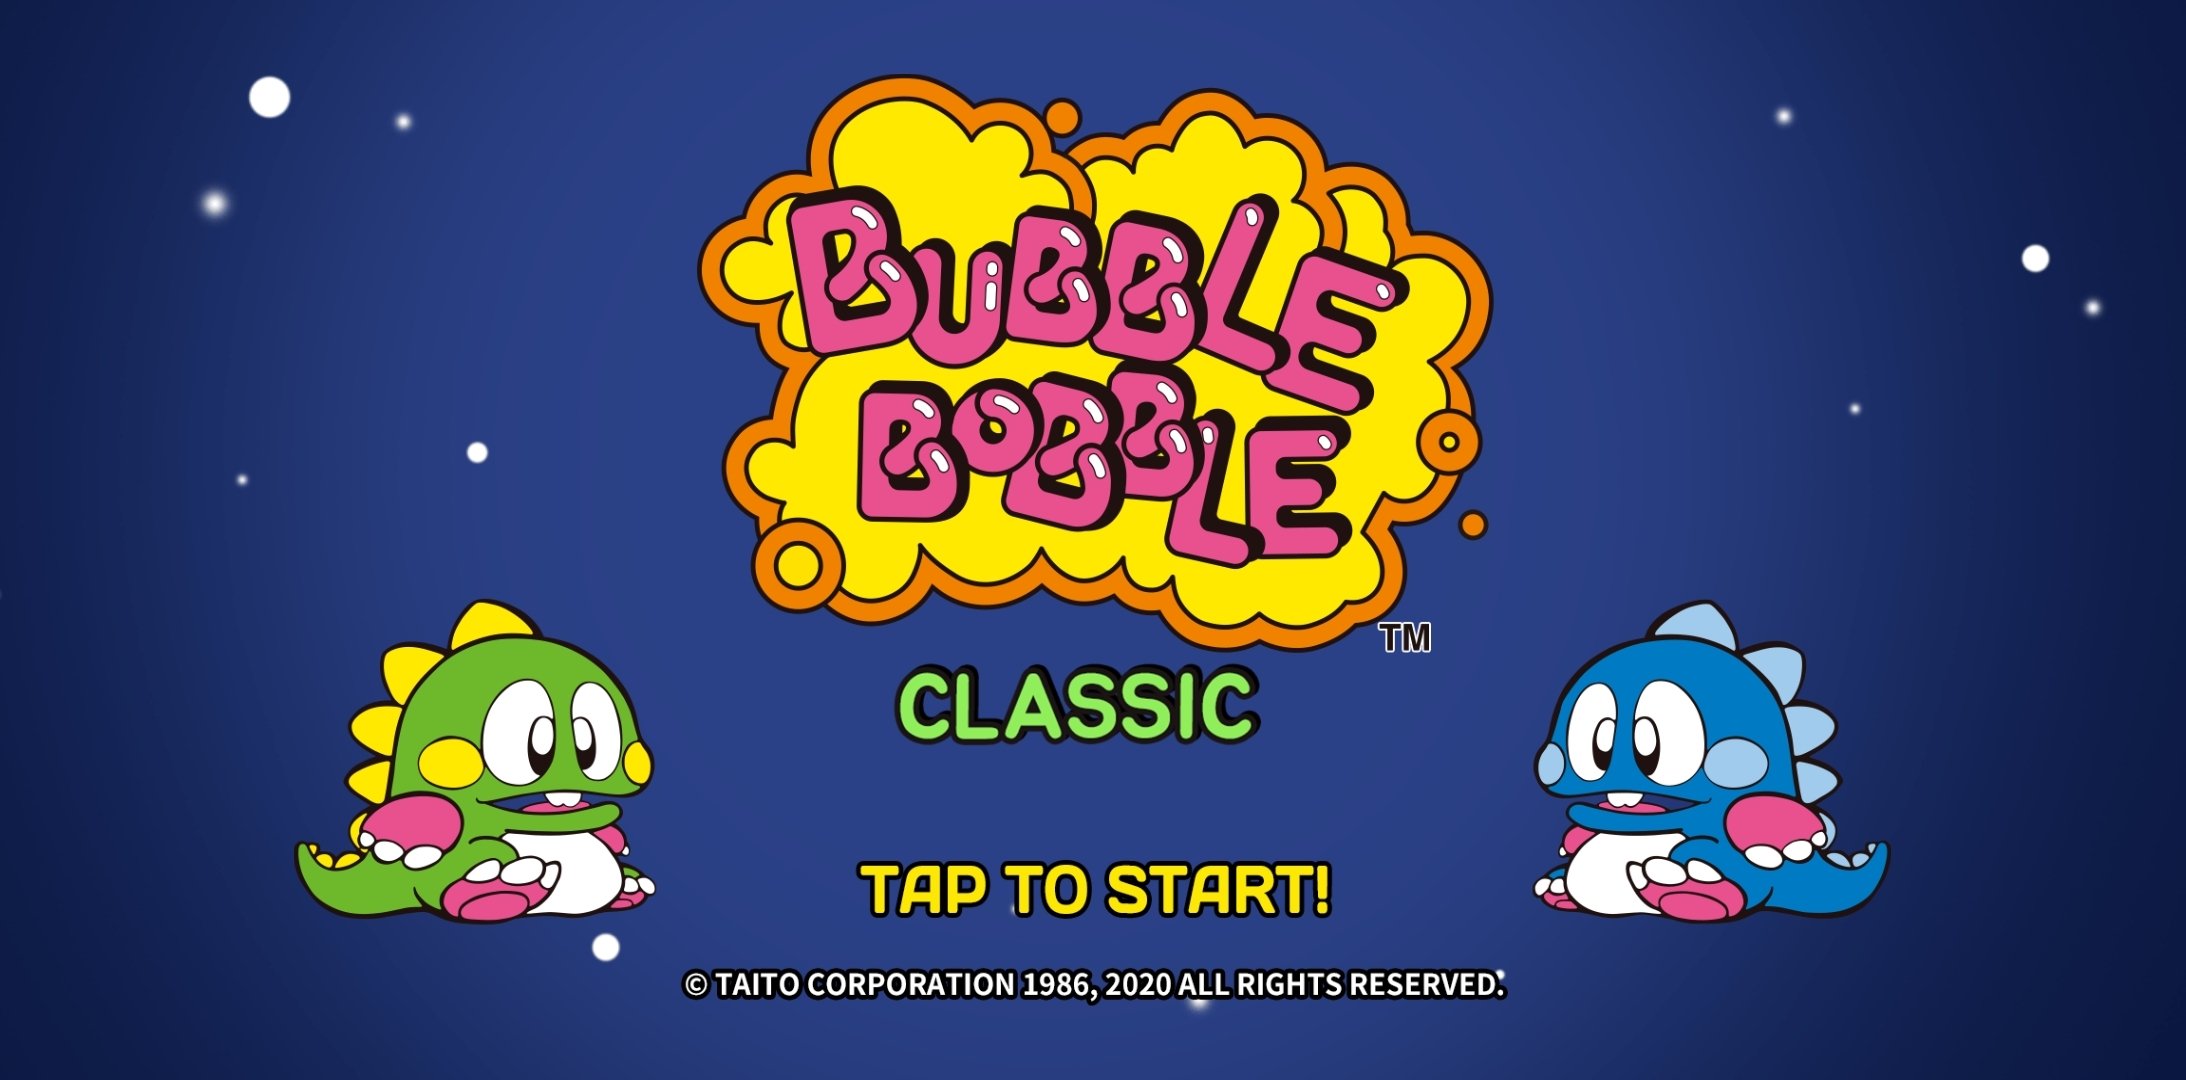 Bubble – Um jogo clássico para Android